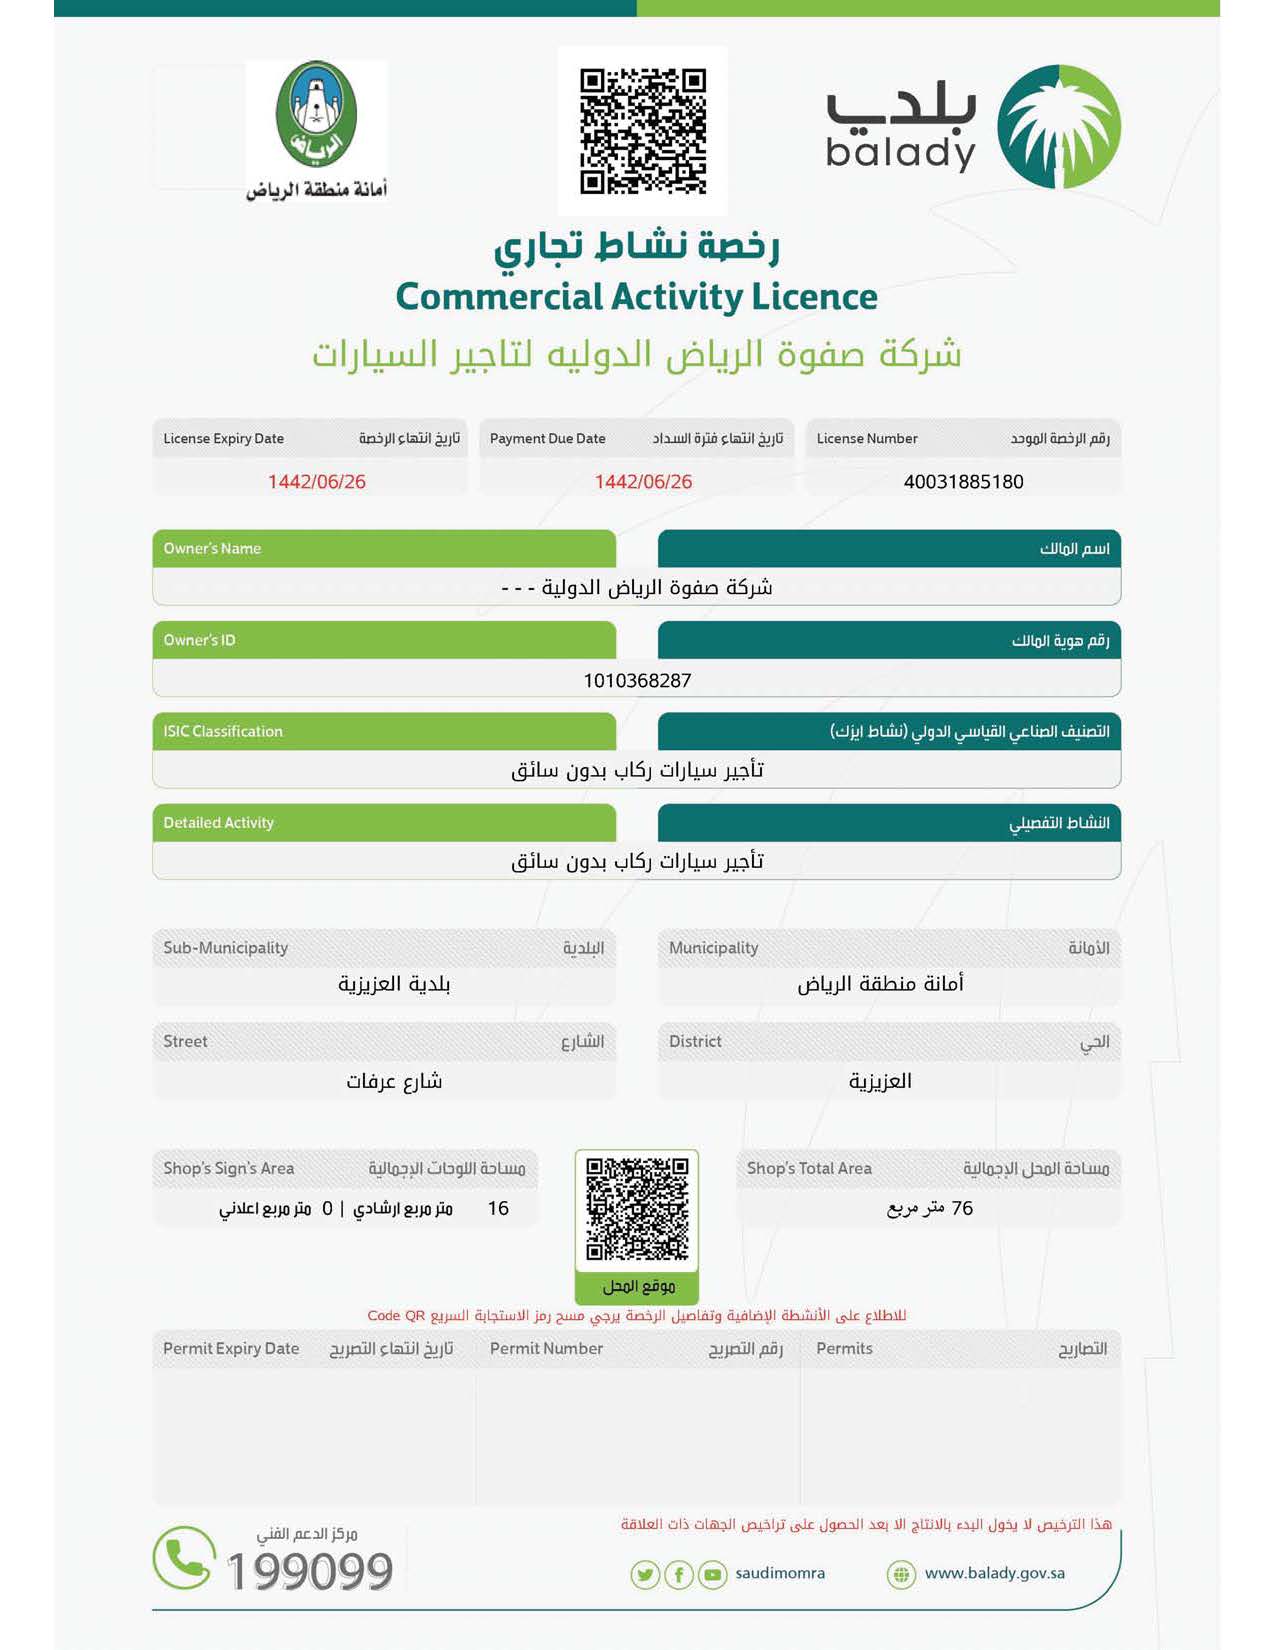 البلديات Page 14 One of the leading companies and a significant number in all its fields